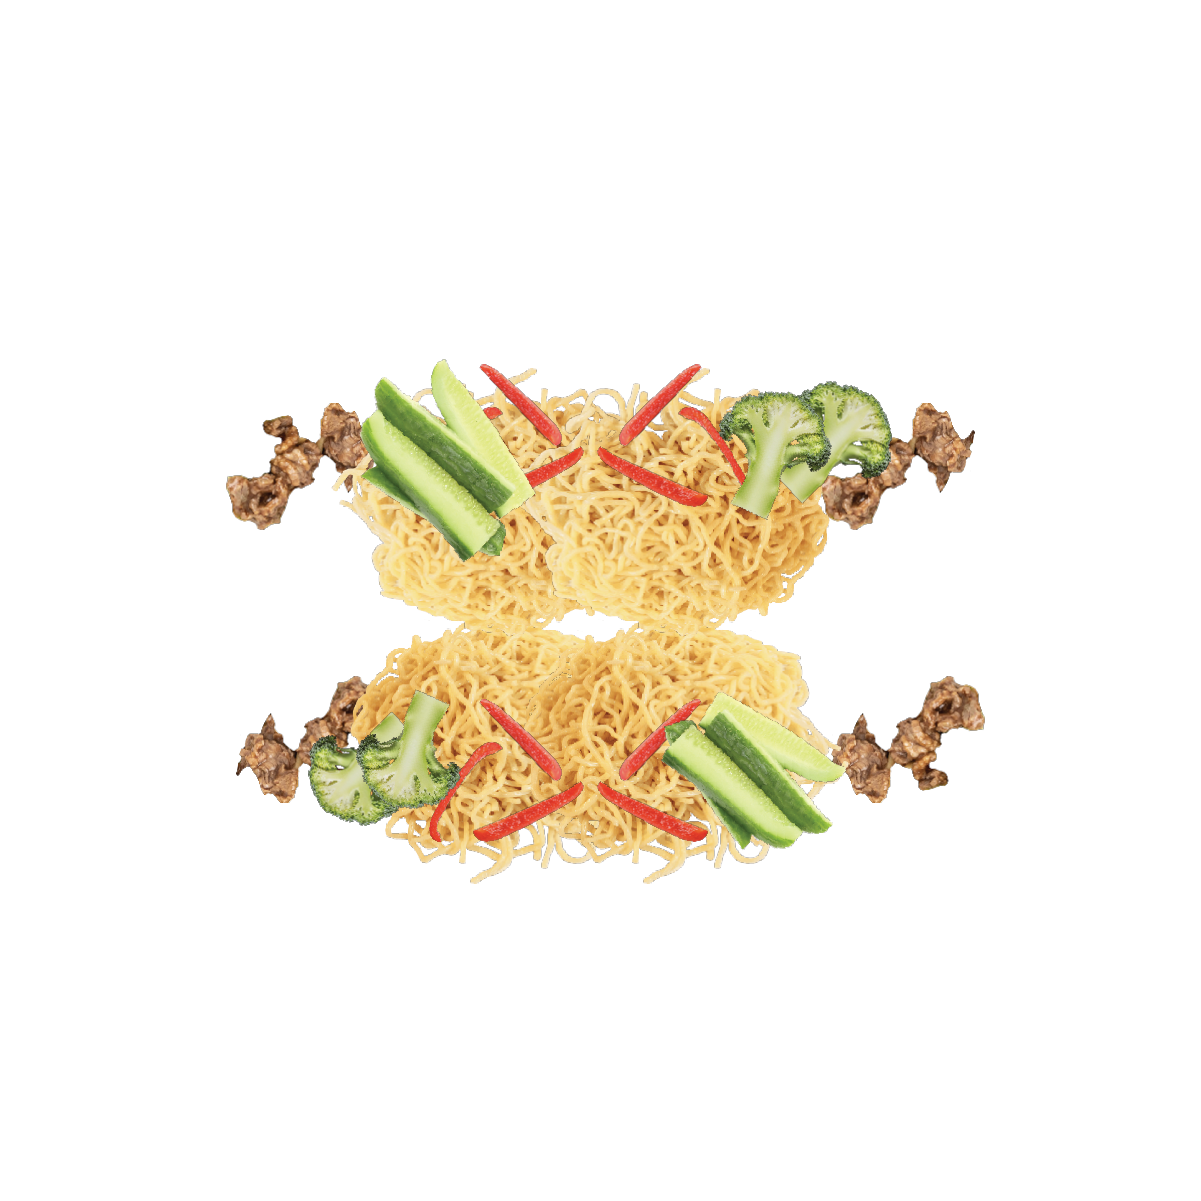 Beef Noodle Salad